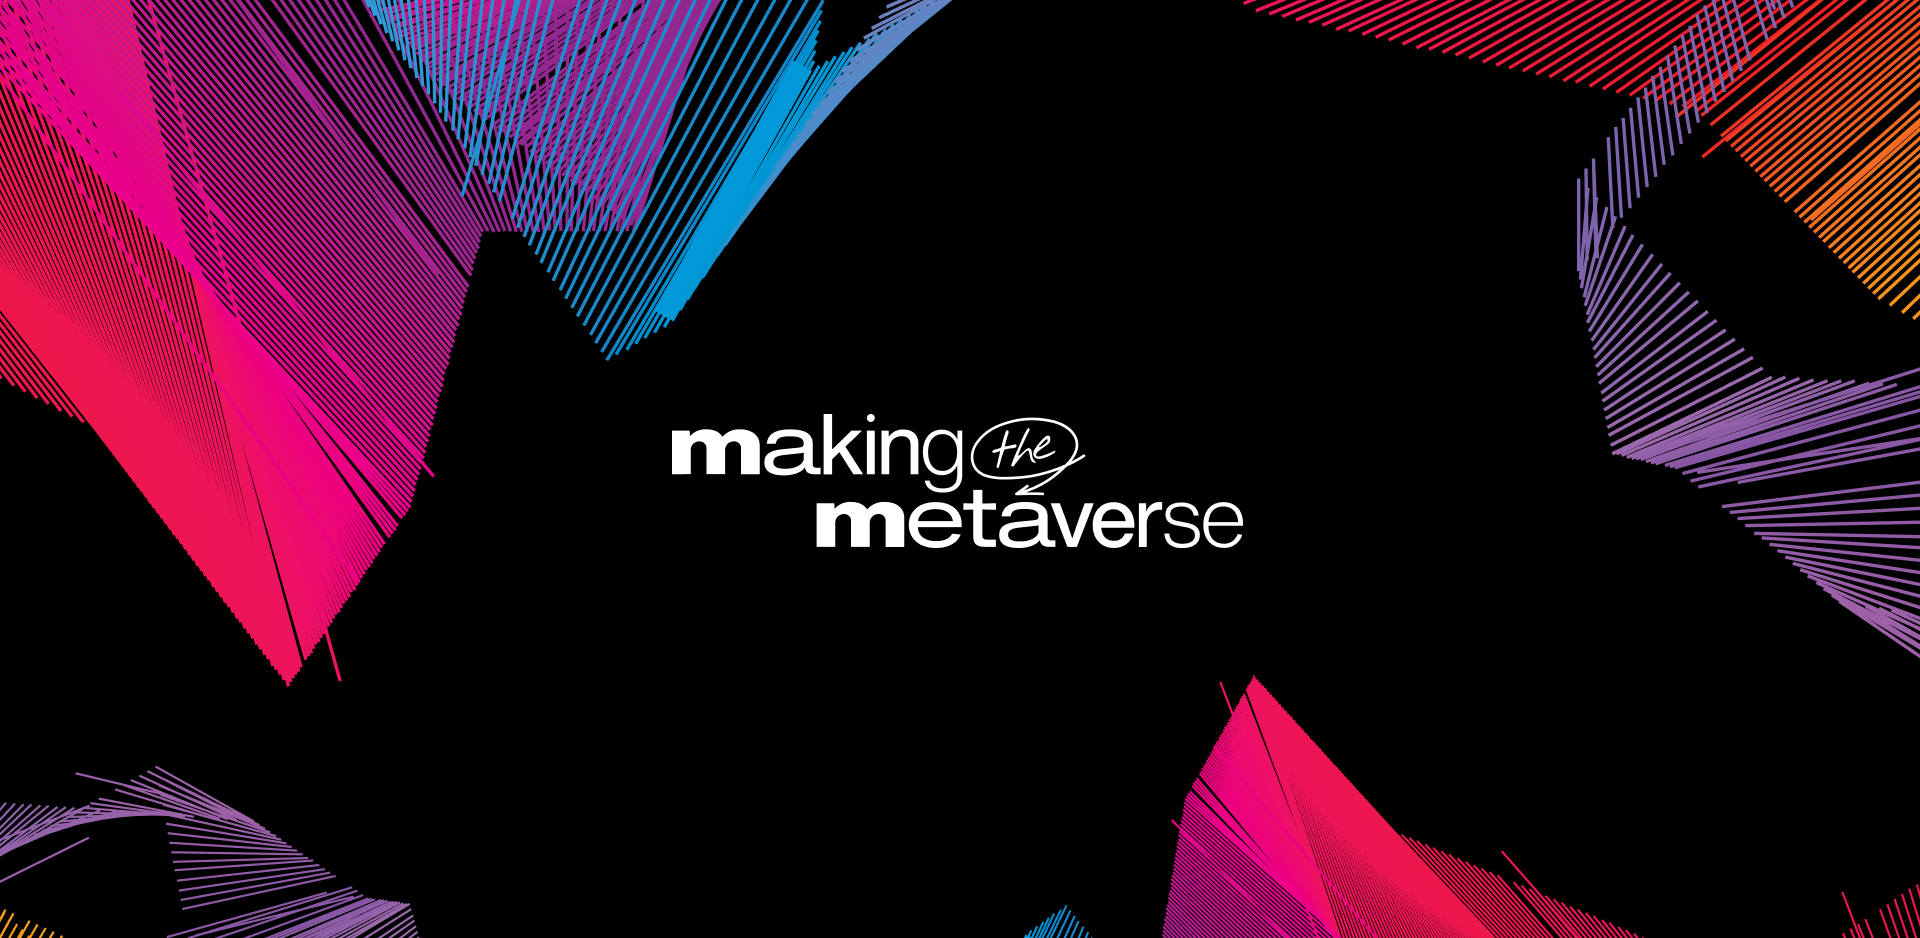 Blog MakingtheMetaverse - درک بهتری از متاورس متاورژن و دنیای مجازی در حال ساخت